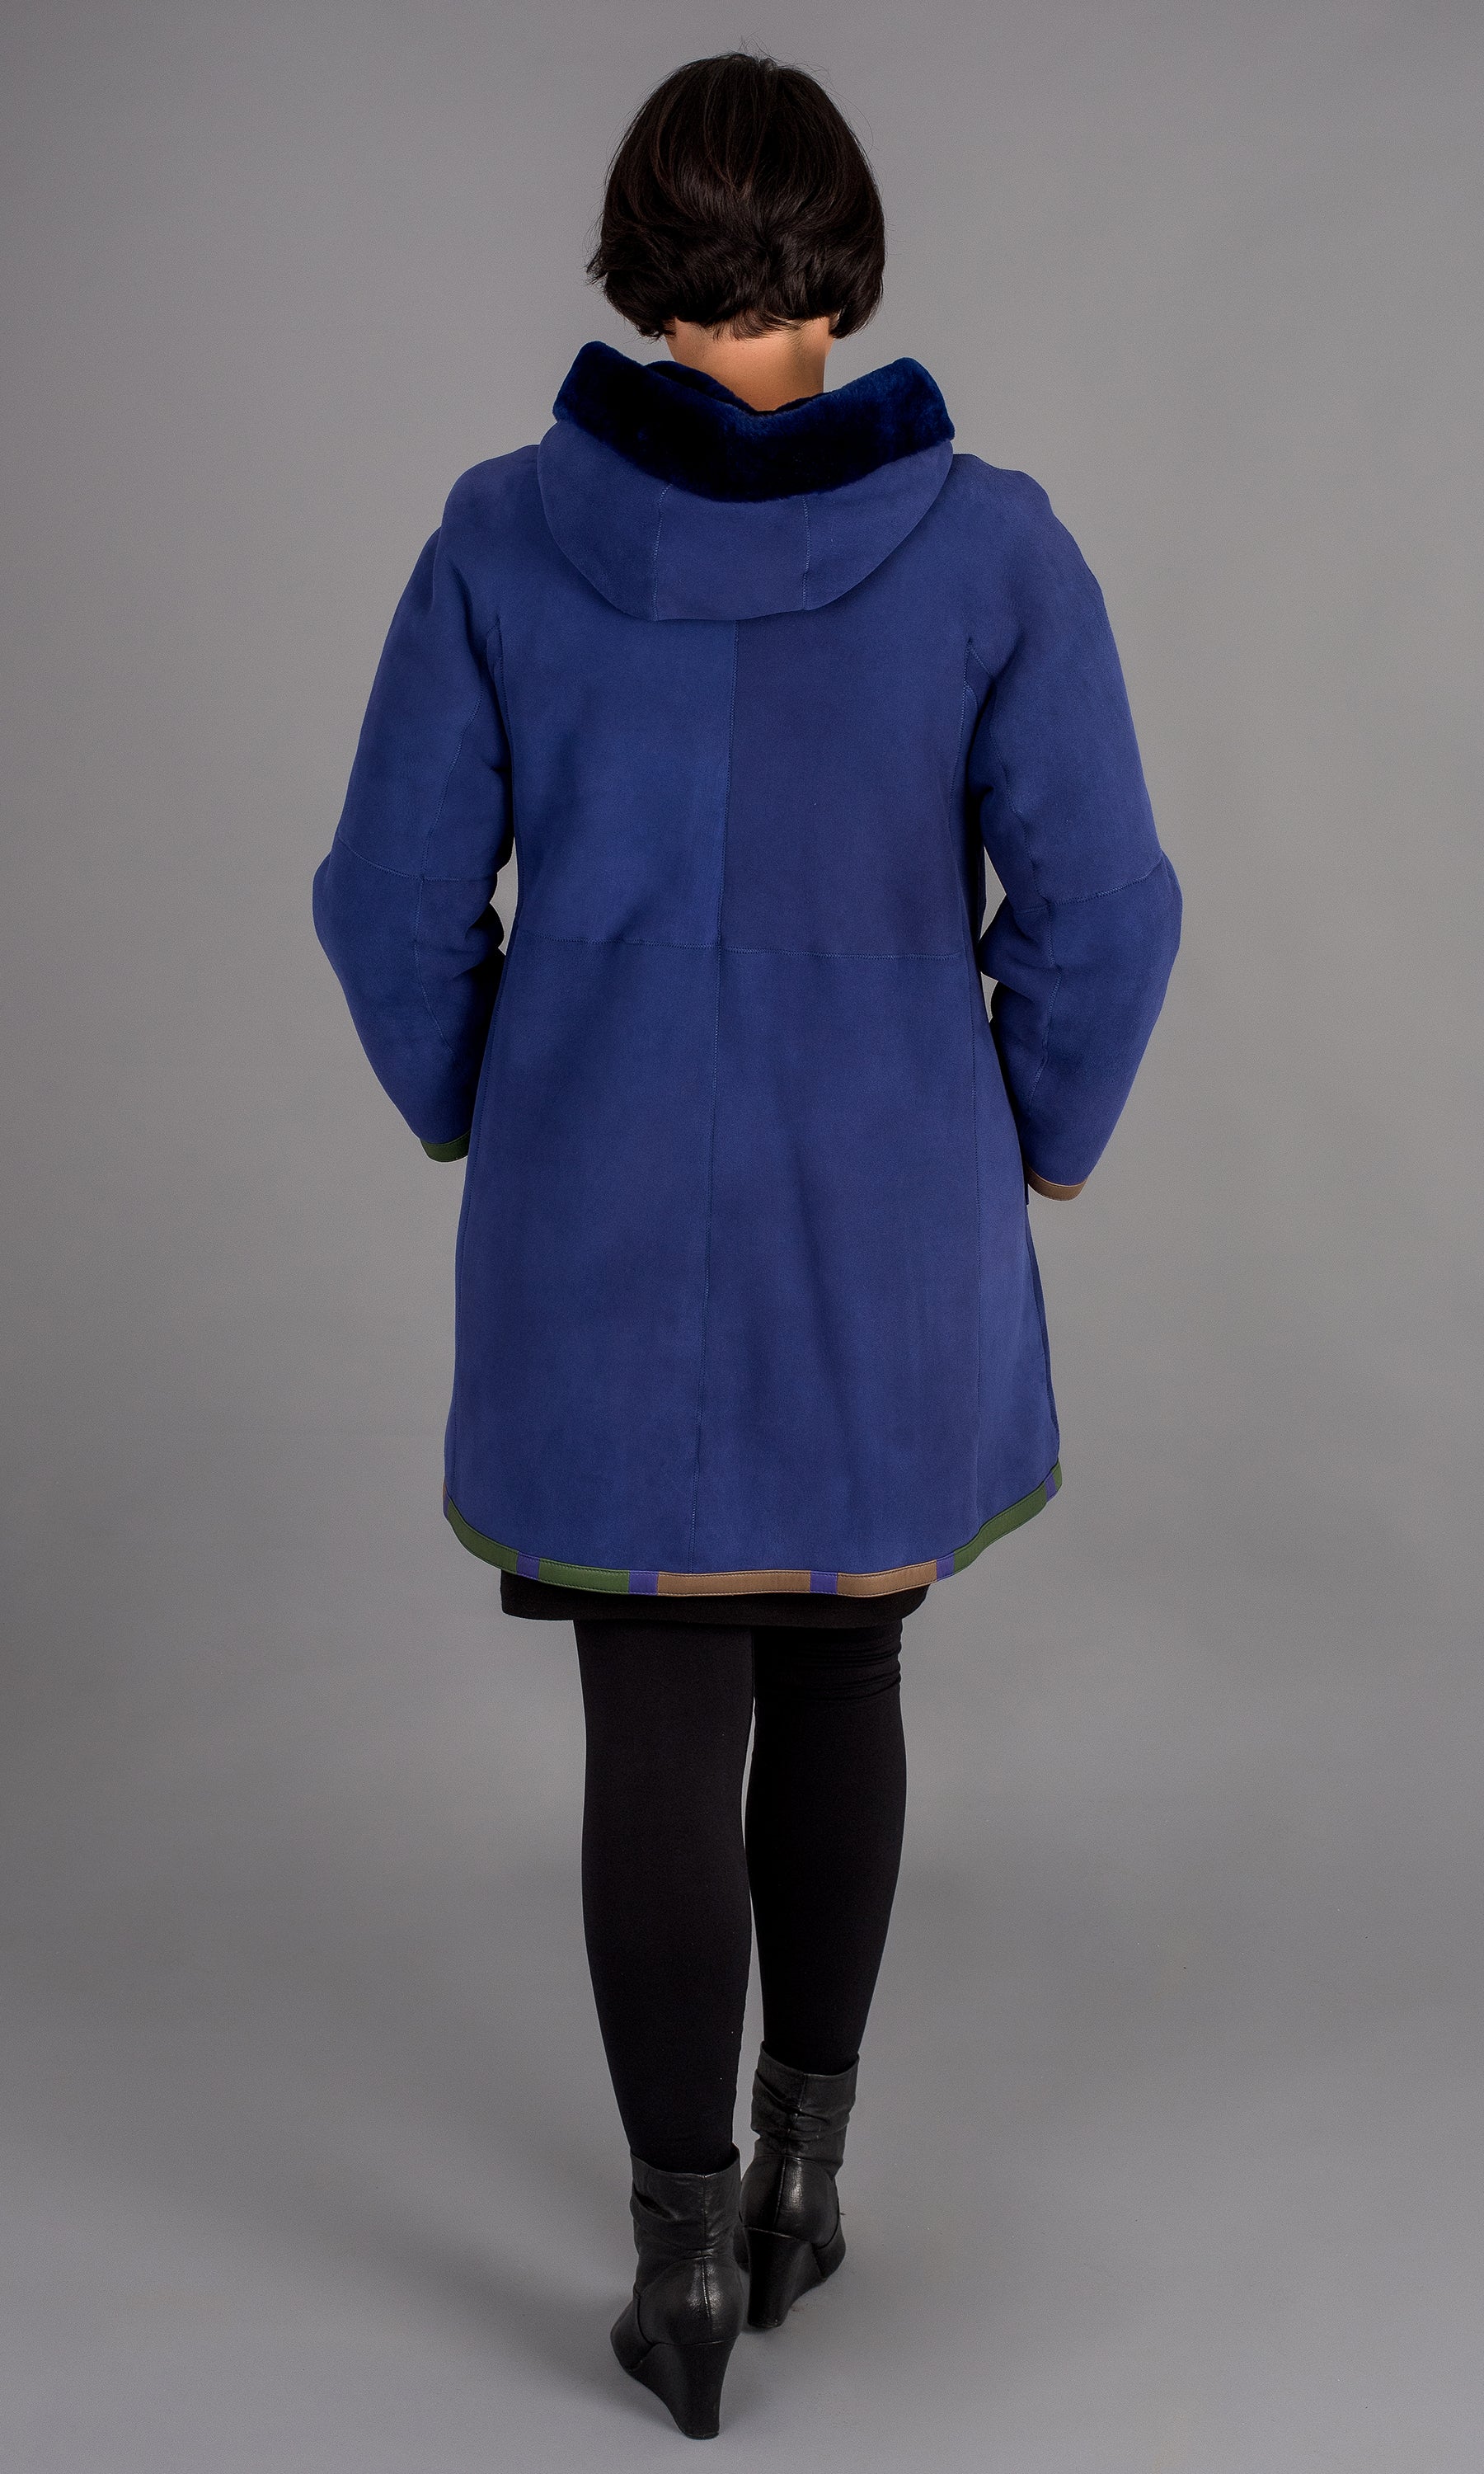 Blue Shearling Swing Coat with hood size medium